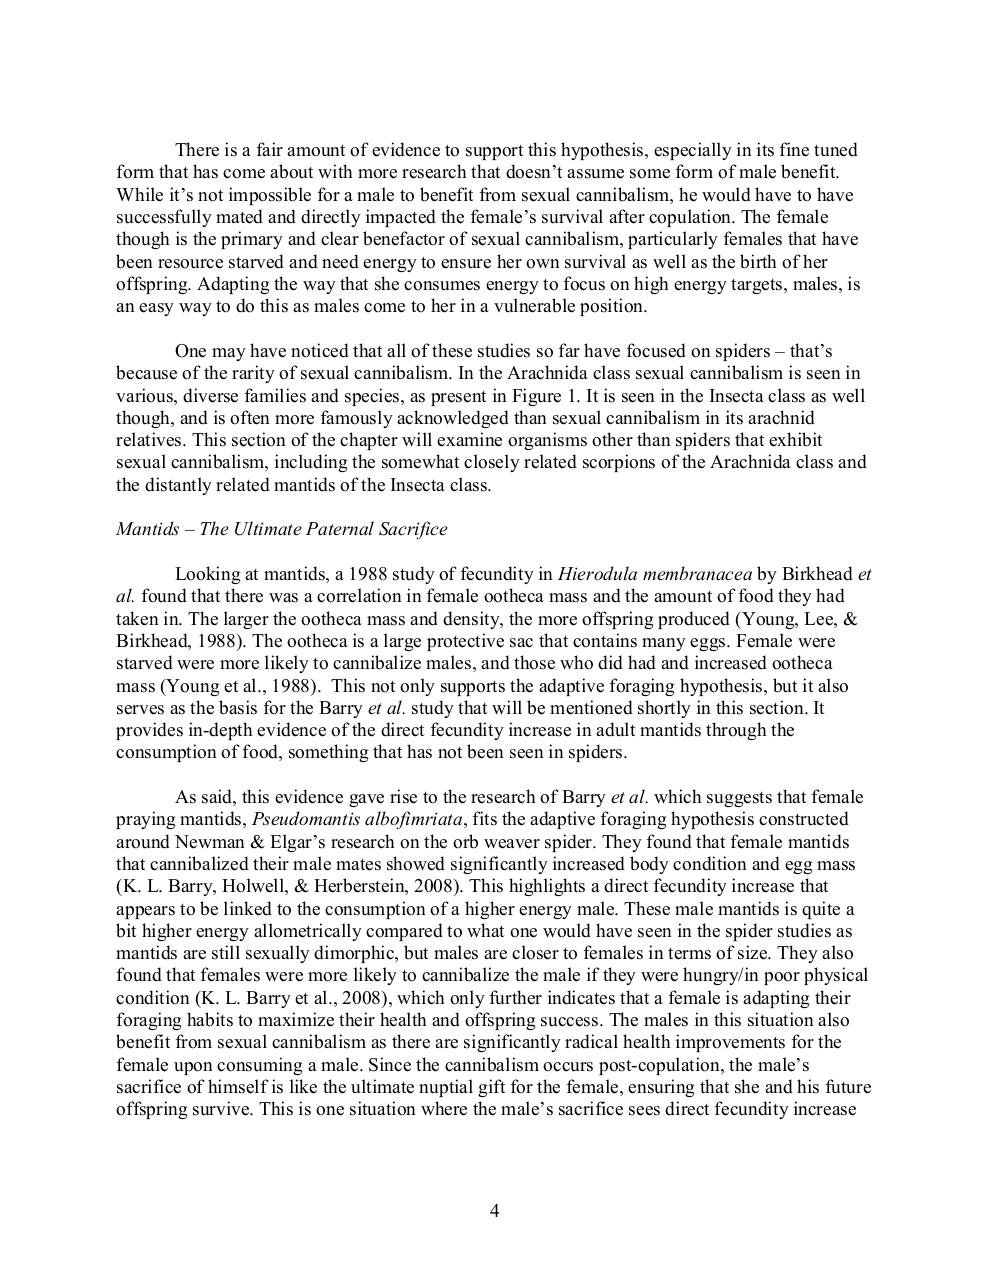 Senior Seminar Final Paper - Revised Ed 2 - Dalton Black.pdf - page 4/13